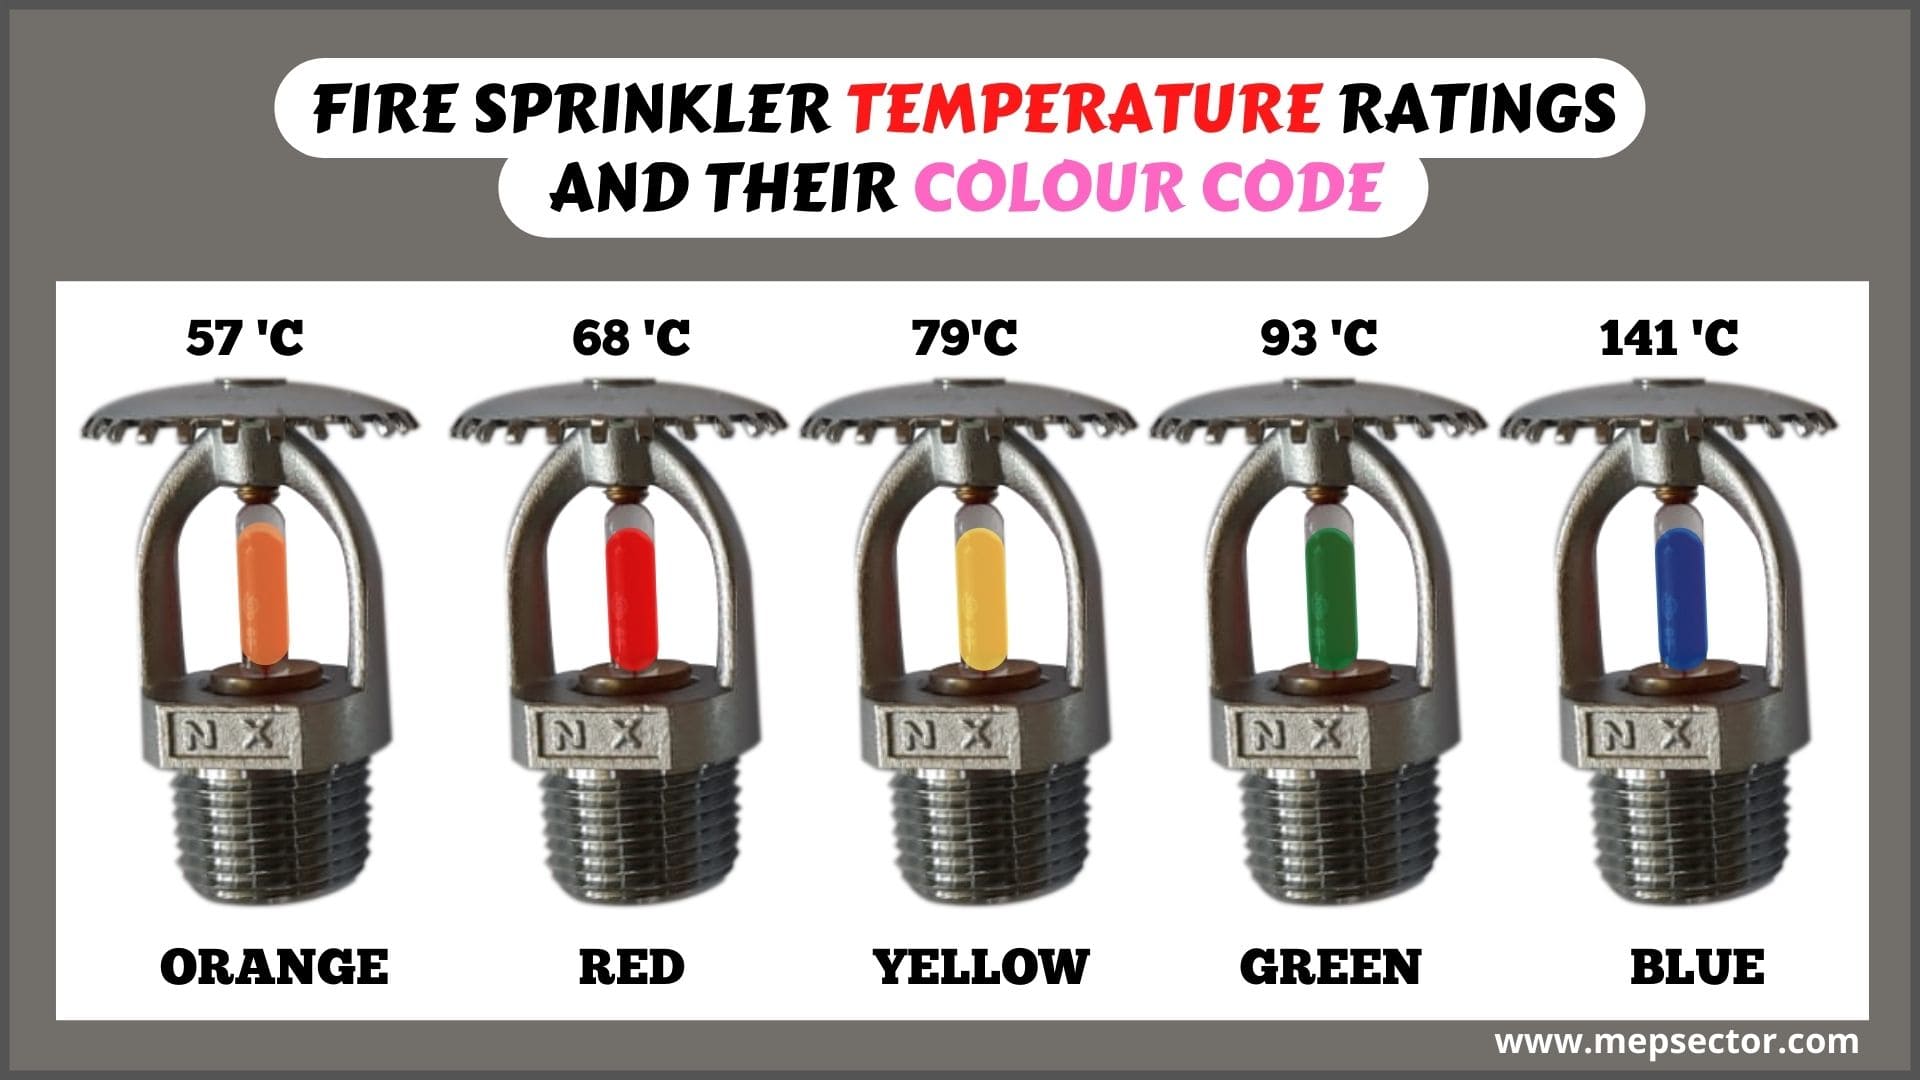 Temperature ratings of fire sprinkler